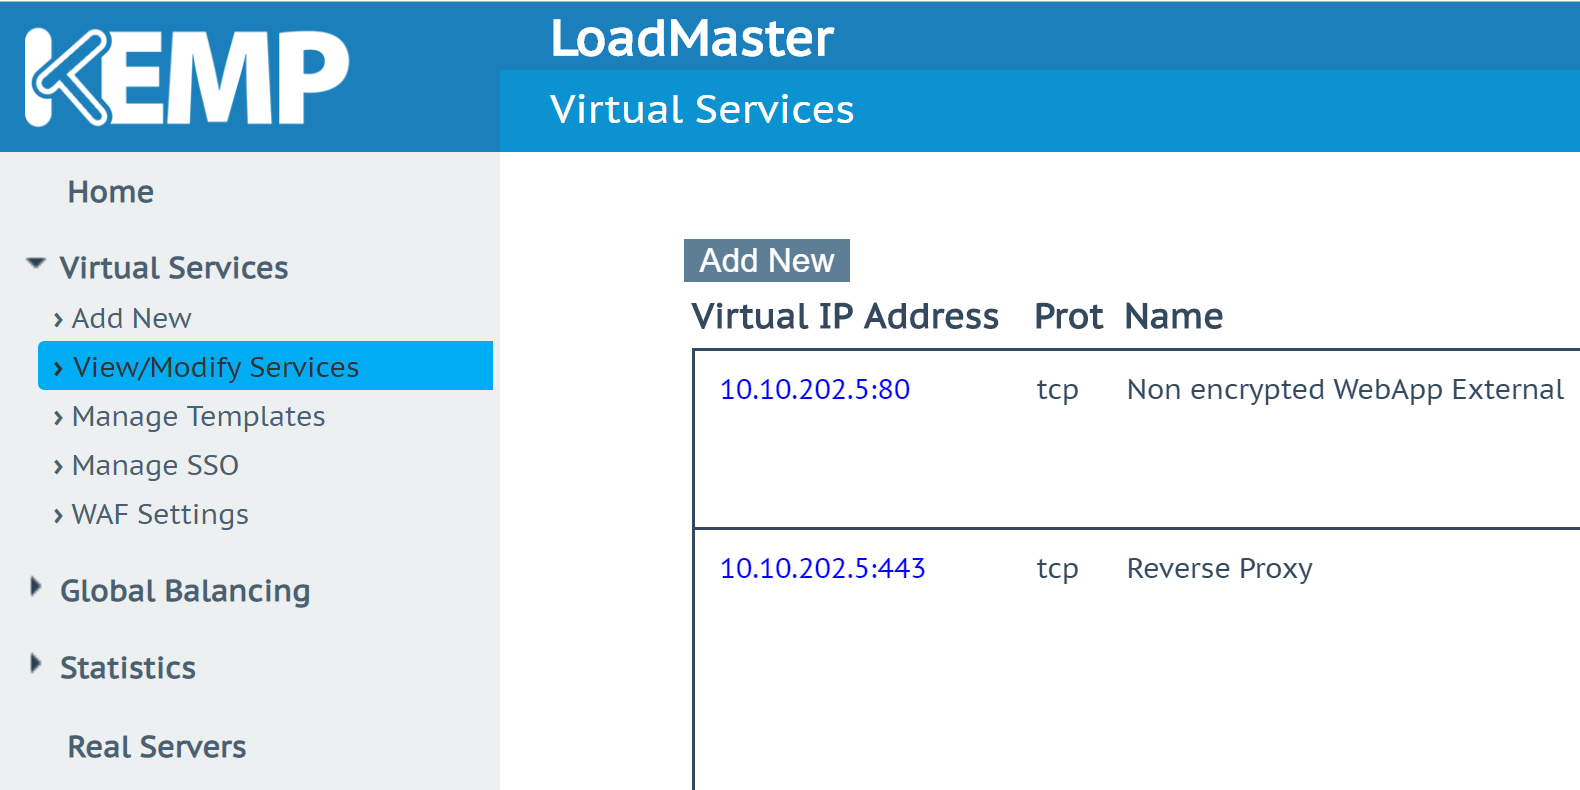 Kemp LoadMaster - View/Modify Services